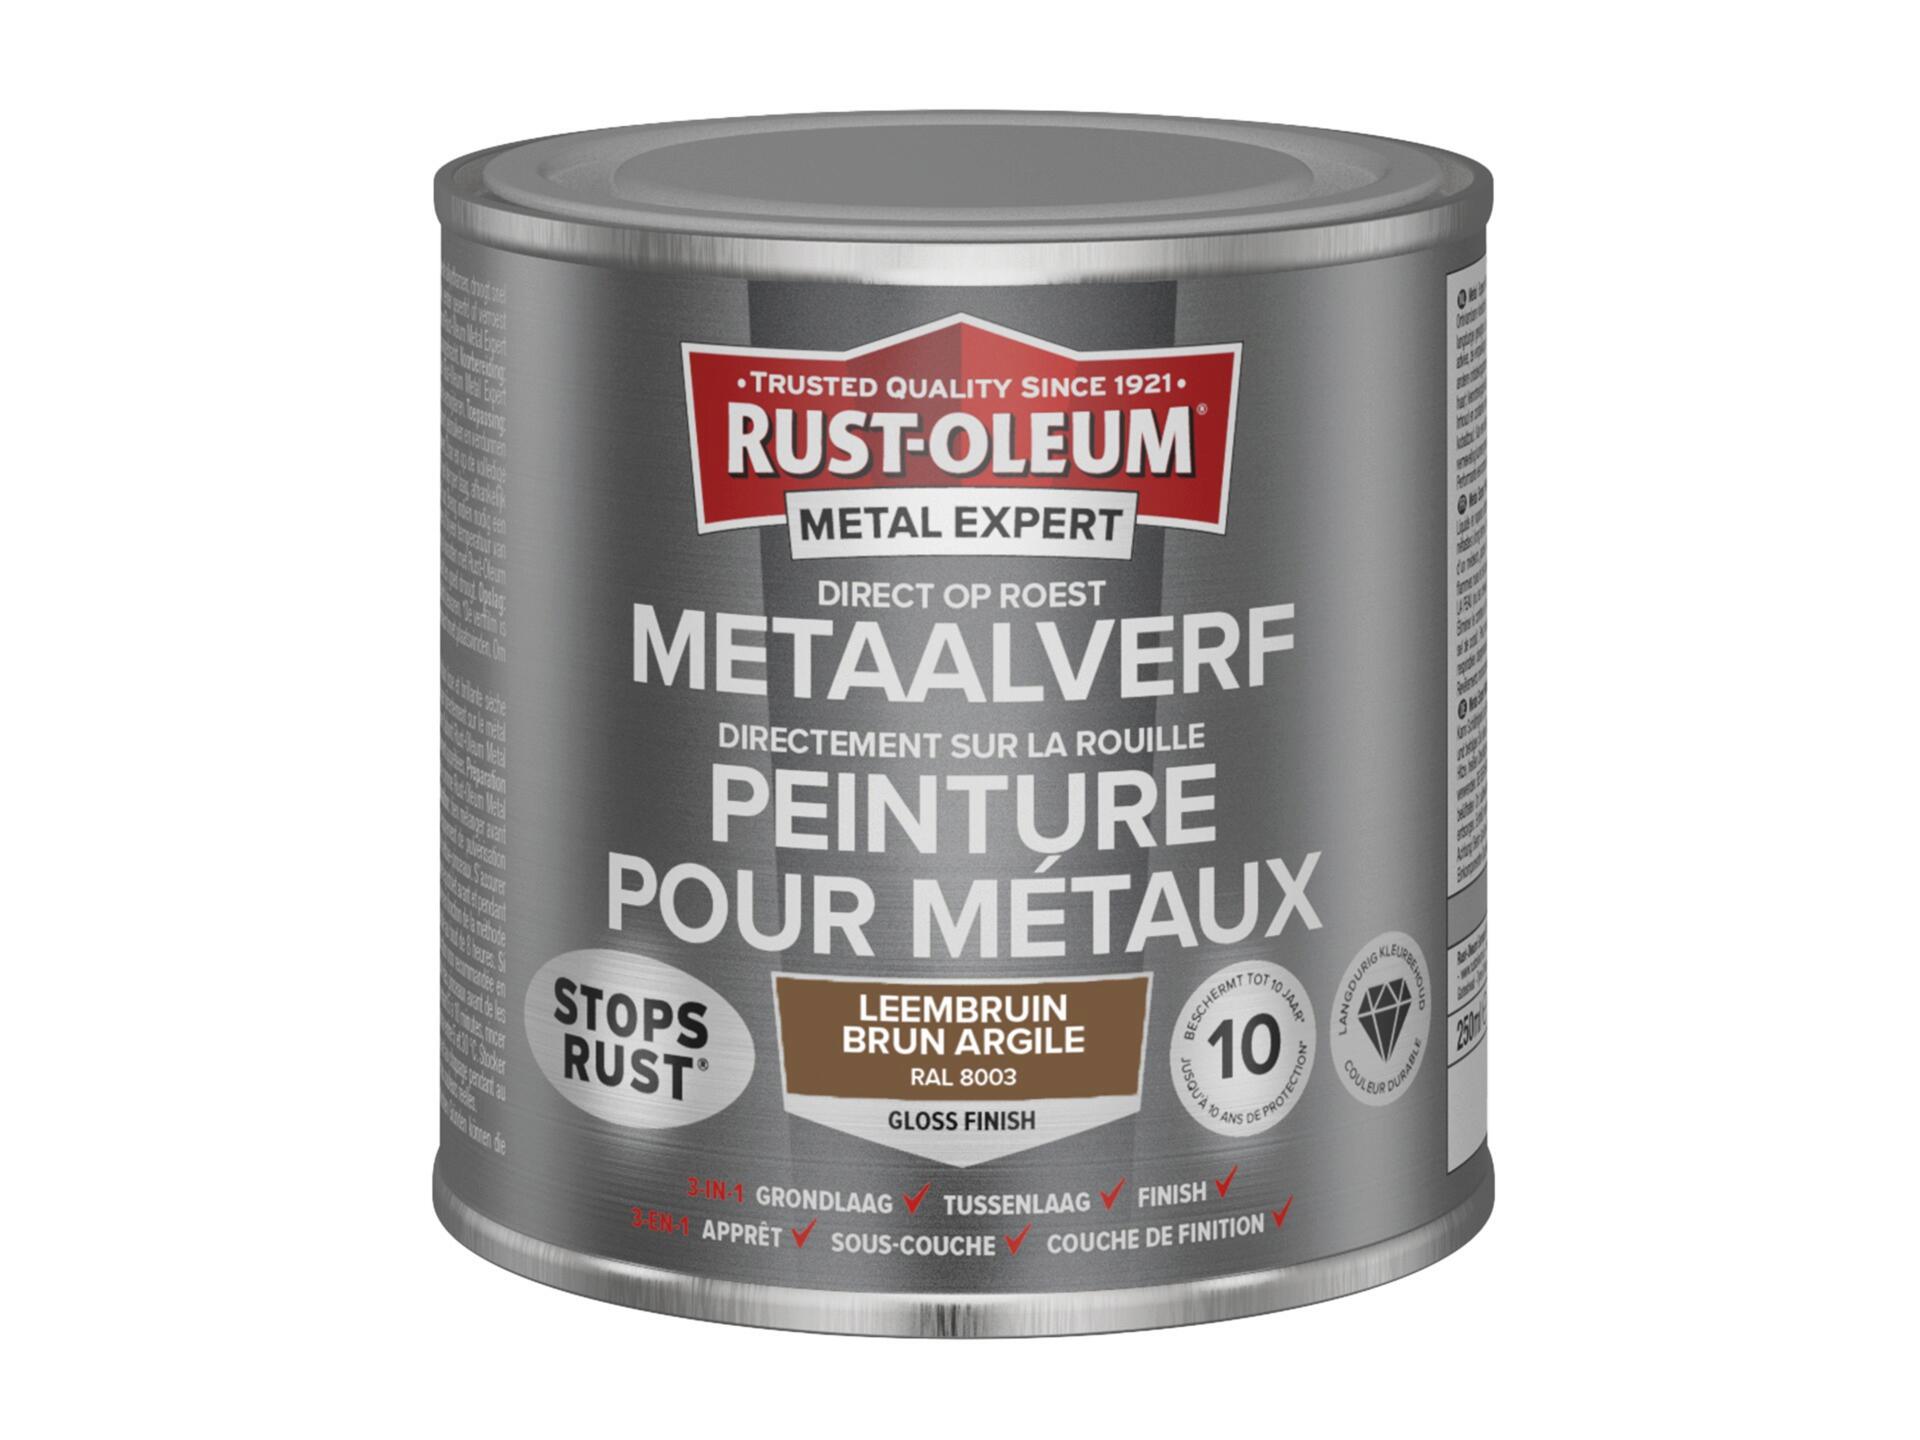 Rust-oleum Metal Expert peinture pour métaux brillant 250ml brun argile